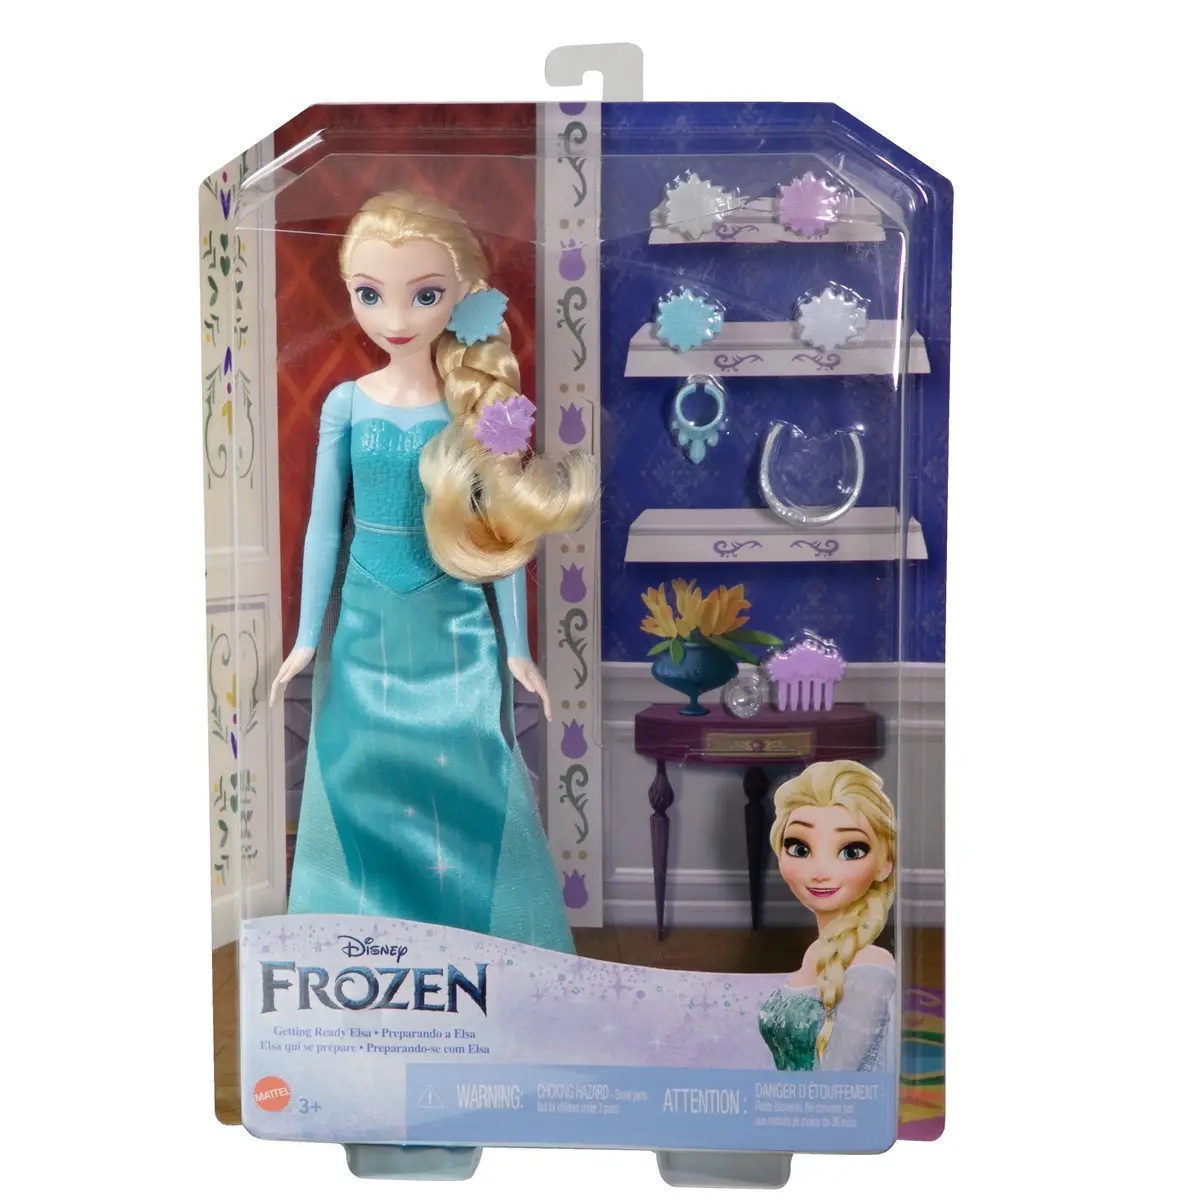 Mattel(R) Disney Frozen Get Ready Elsa Doll